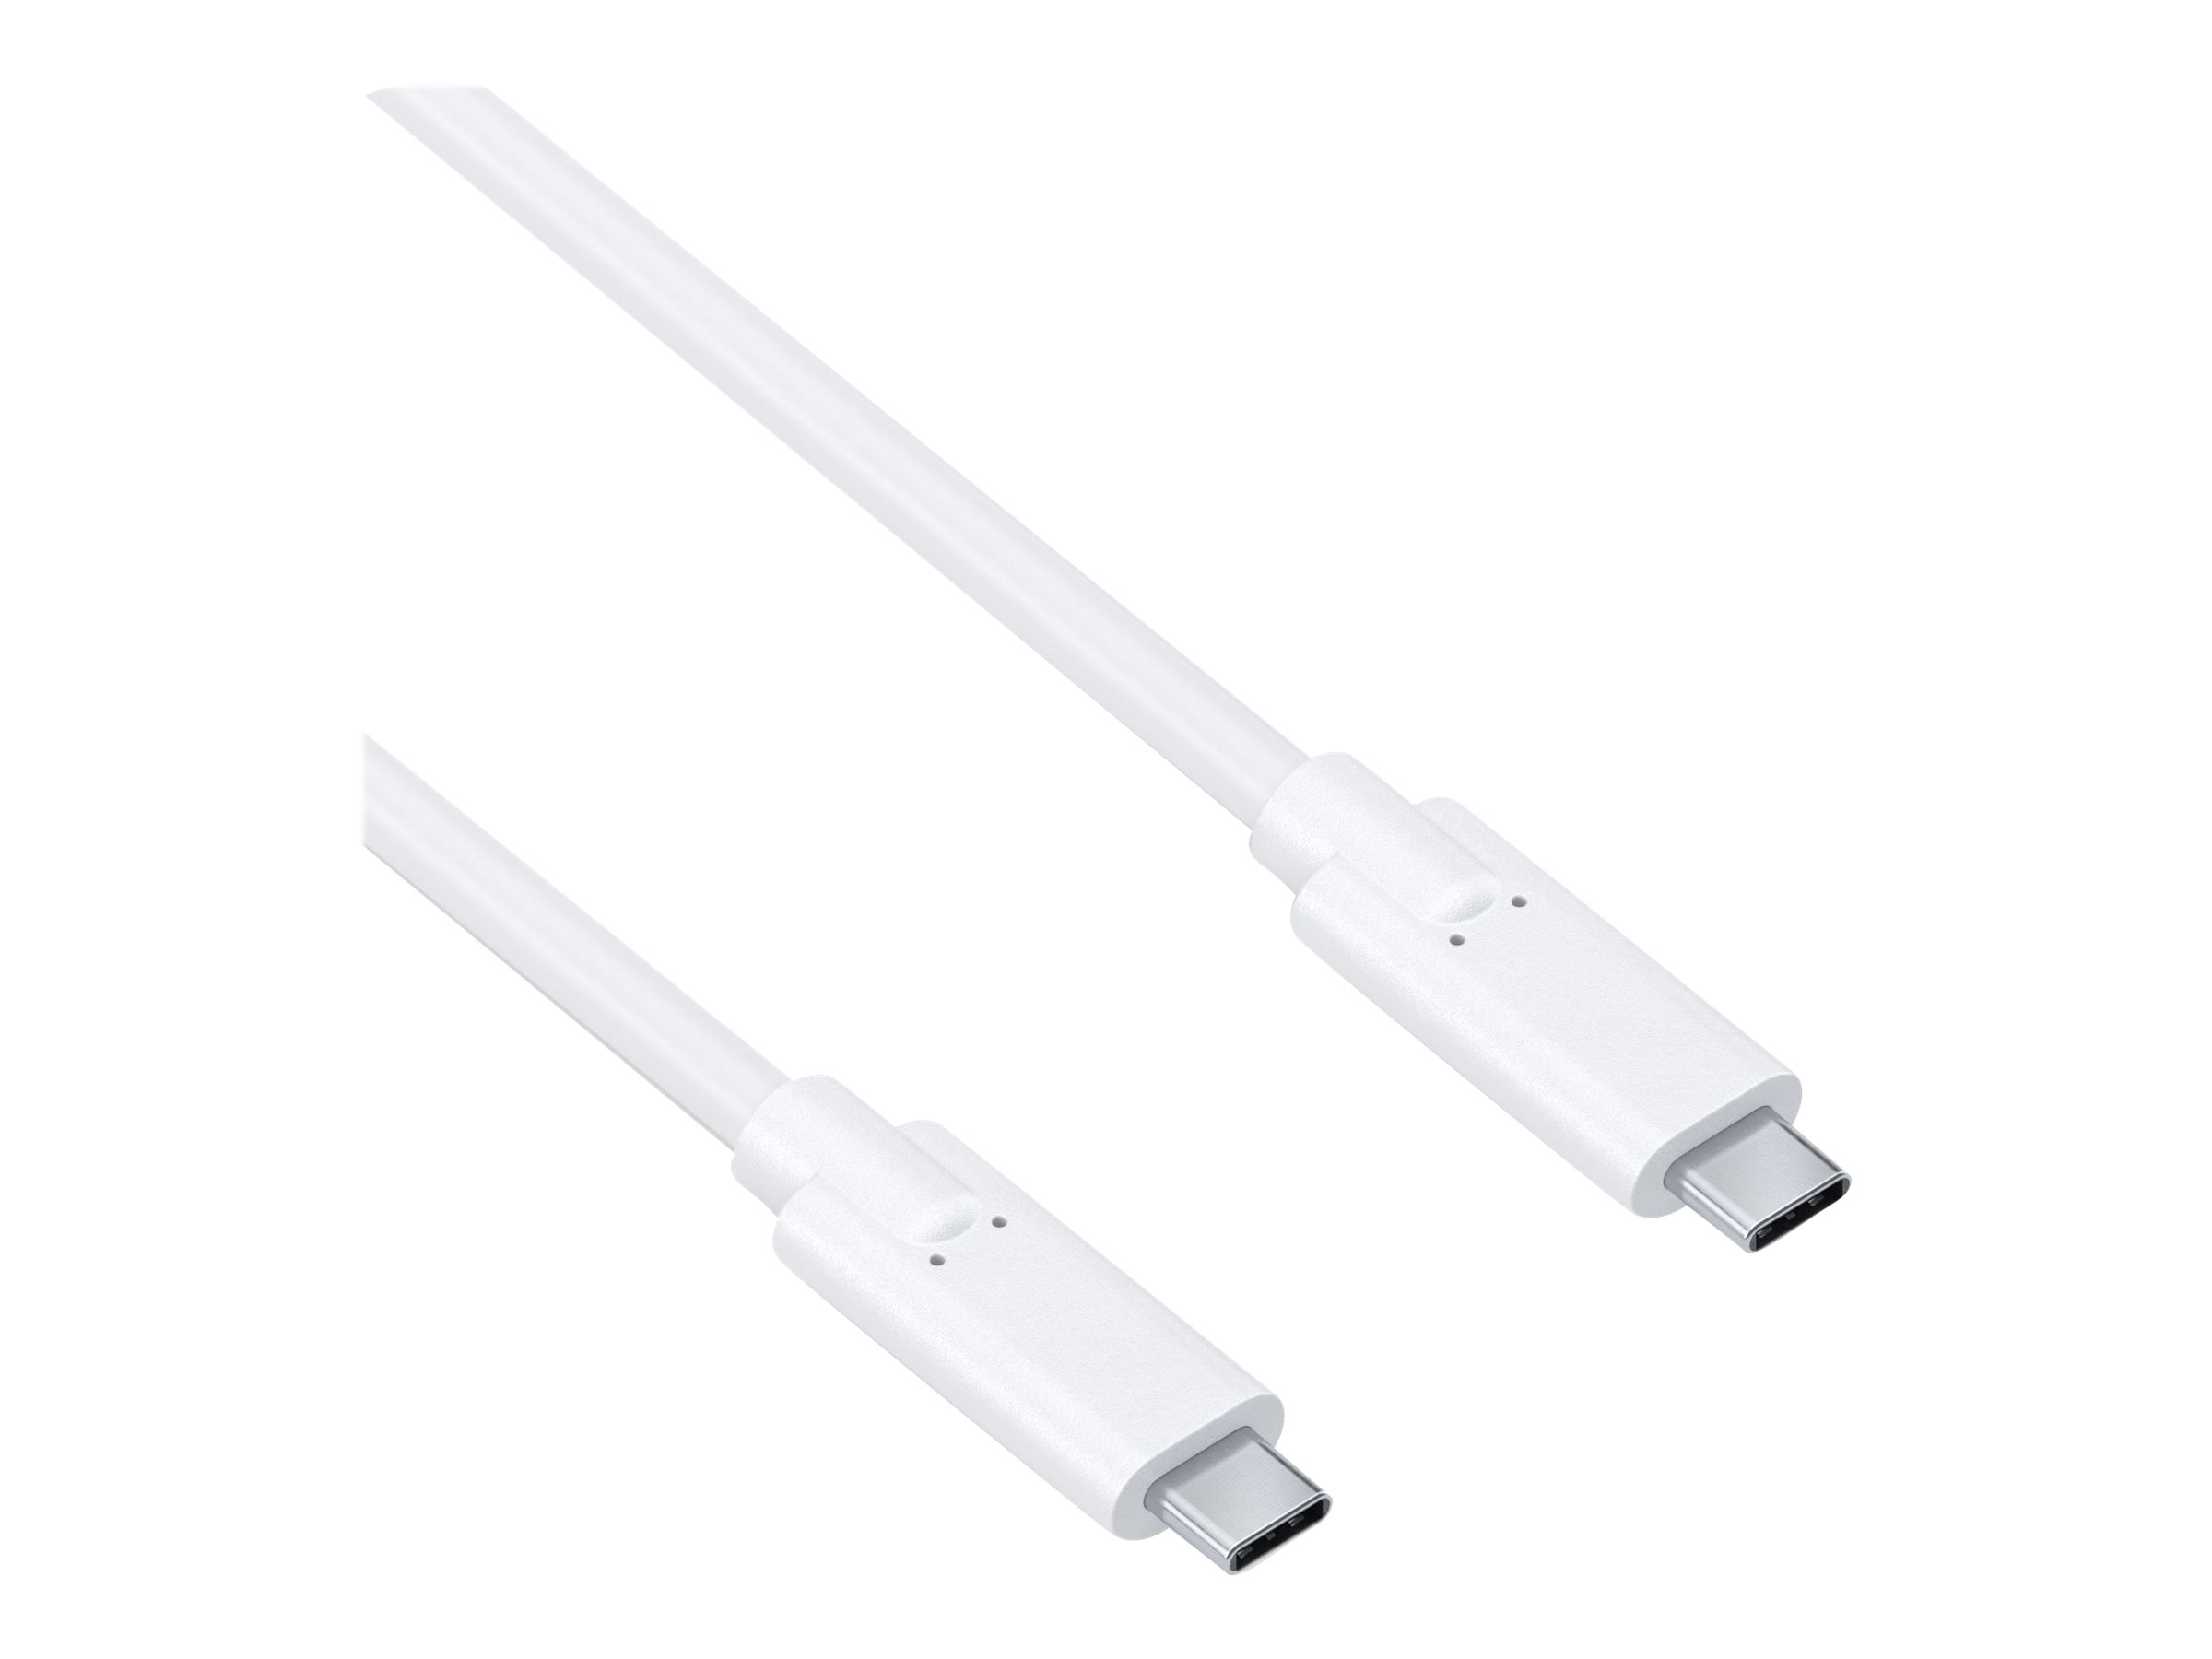 PureLink IS2500-015 - Premium USB 3.2 (Gen 1) USB-C Kabel - 1,50m - Weiss